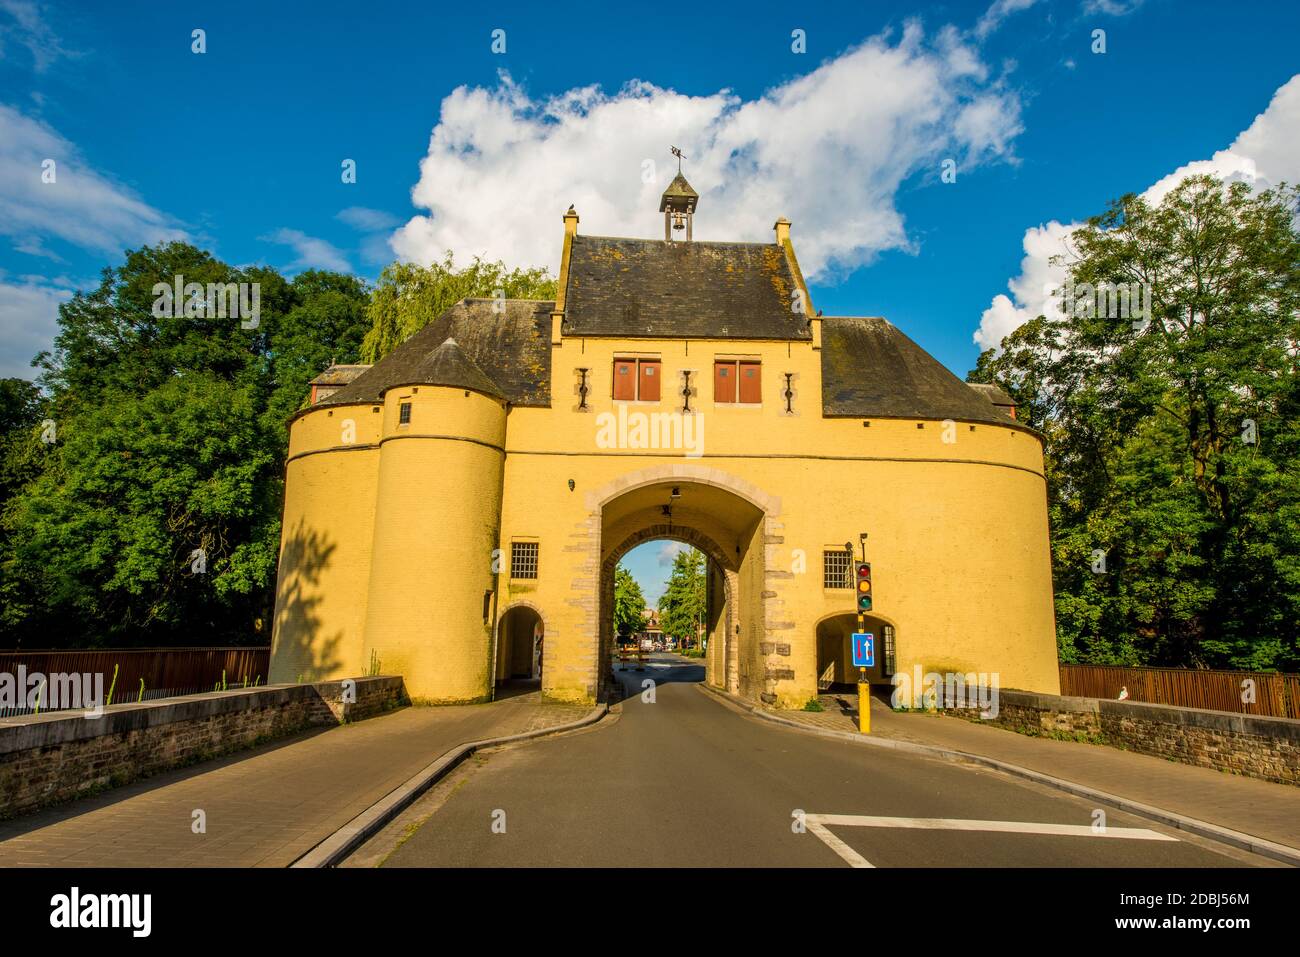 Ezelpoort (Donkey's Gate), fortified gate, Bruges, West Flanders, Belgium, Europe Stock Photo